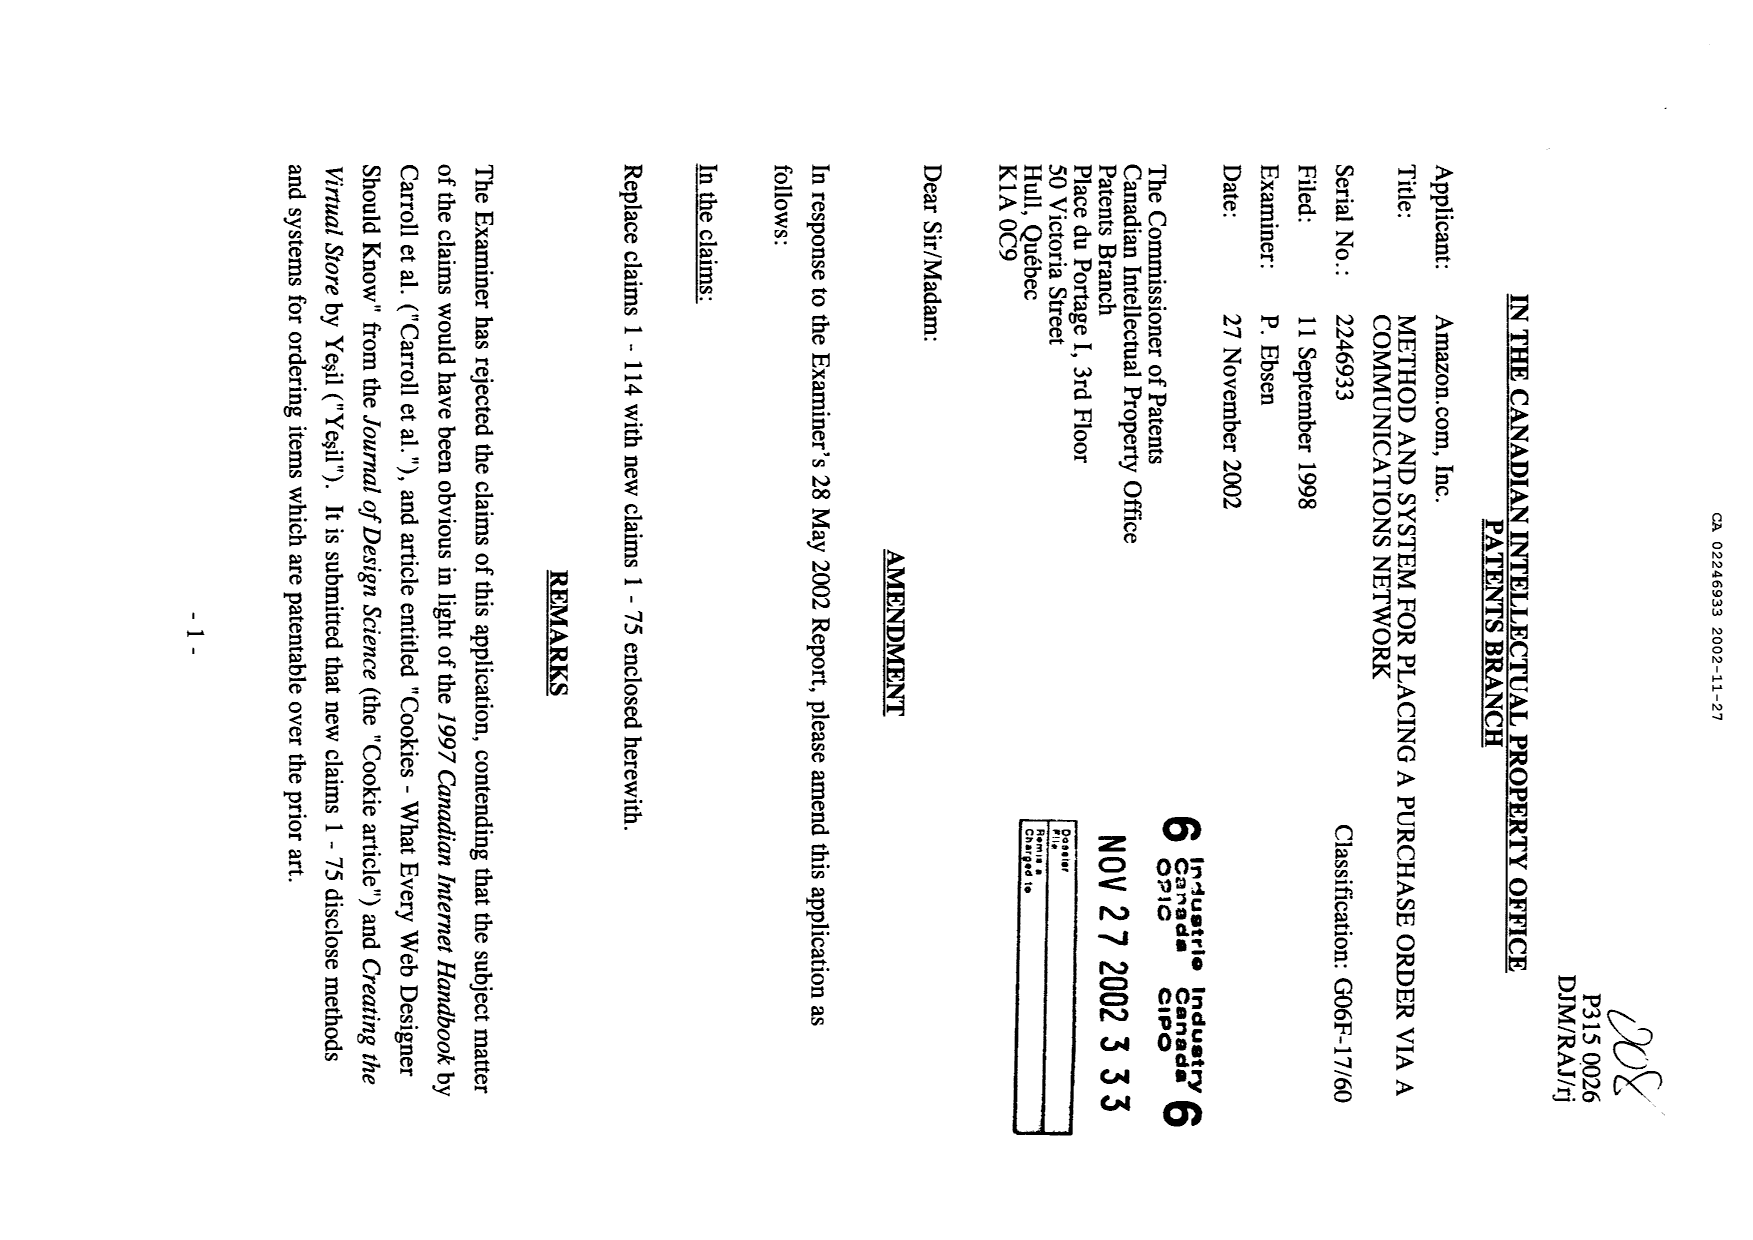 Canadian Patent Document 2246933. Prosecution-Amendment 20011227. Image 1 of 13